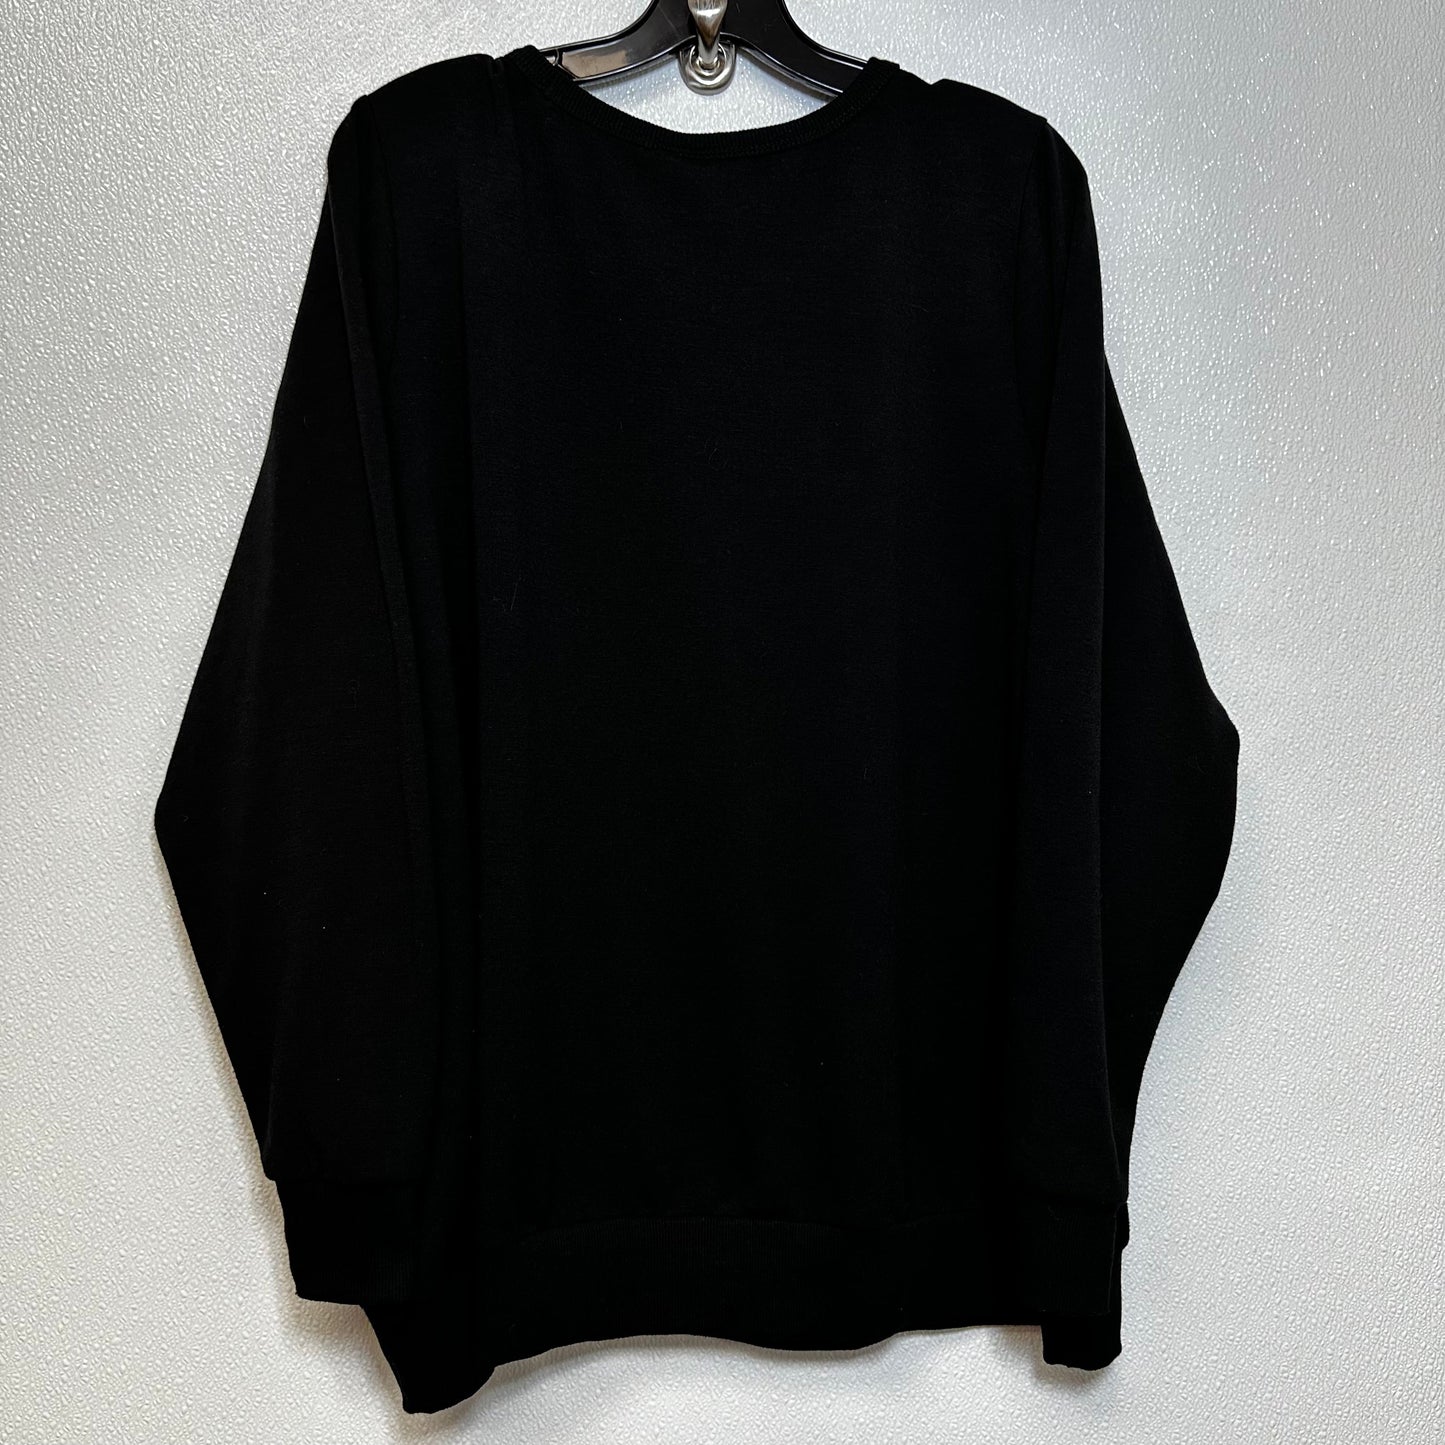 Black Sweatshirt Crewneck Torrid, Size 2x